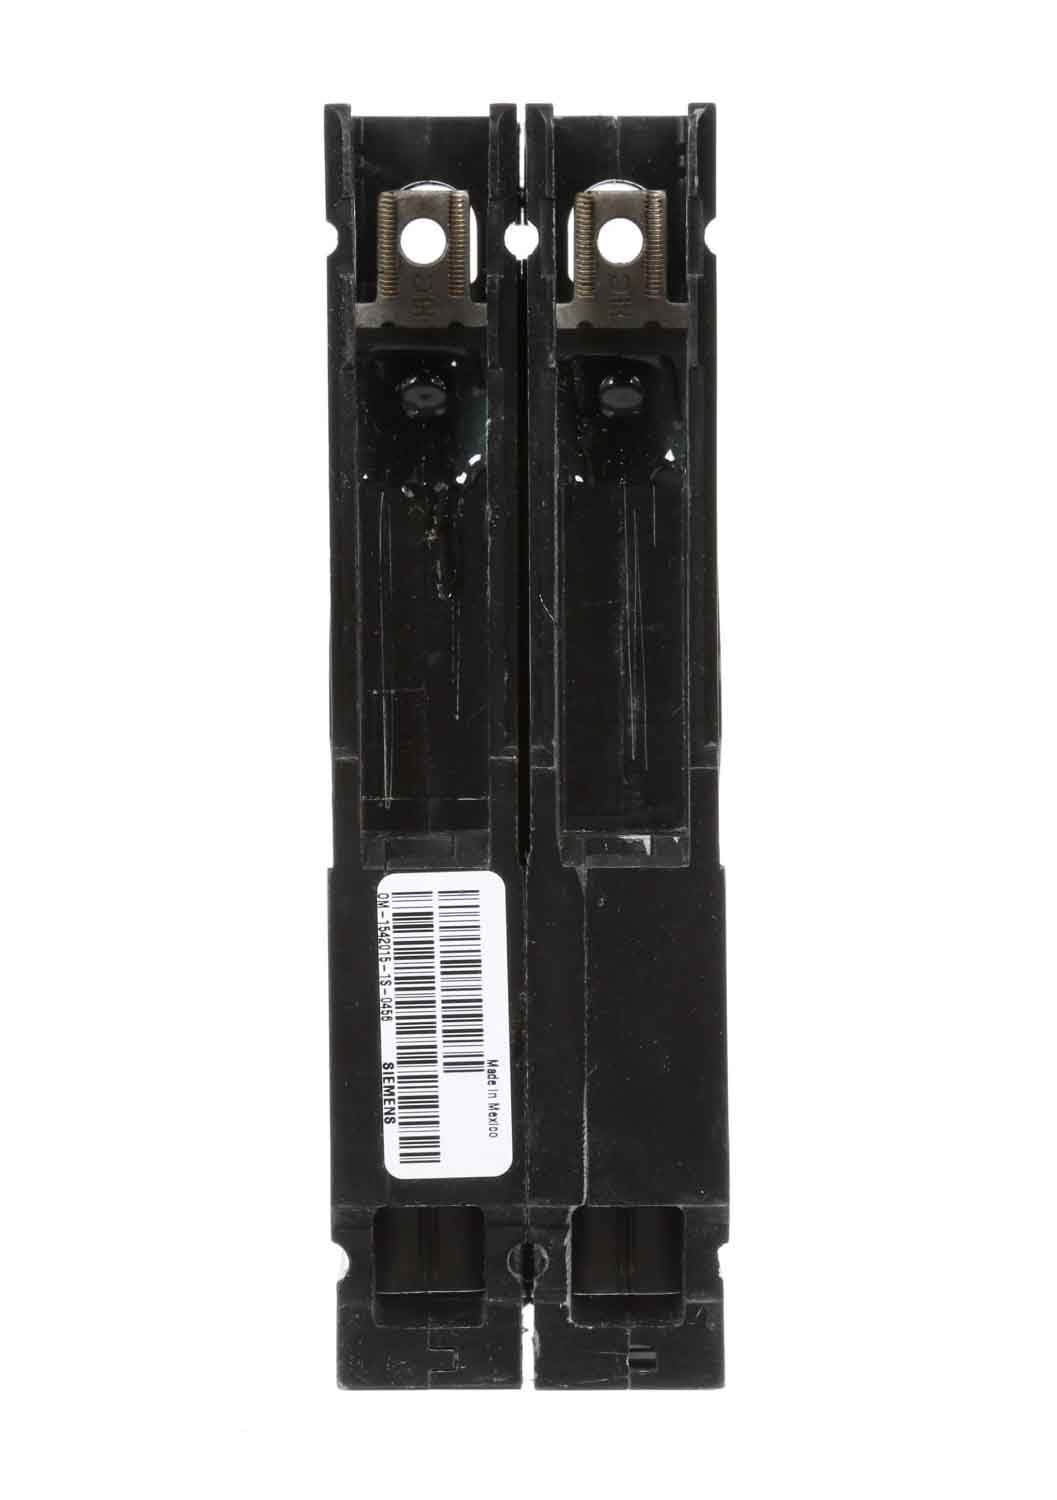 HED42B040 - Siemens - Molded Case Circuit Breaker